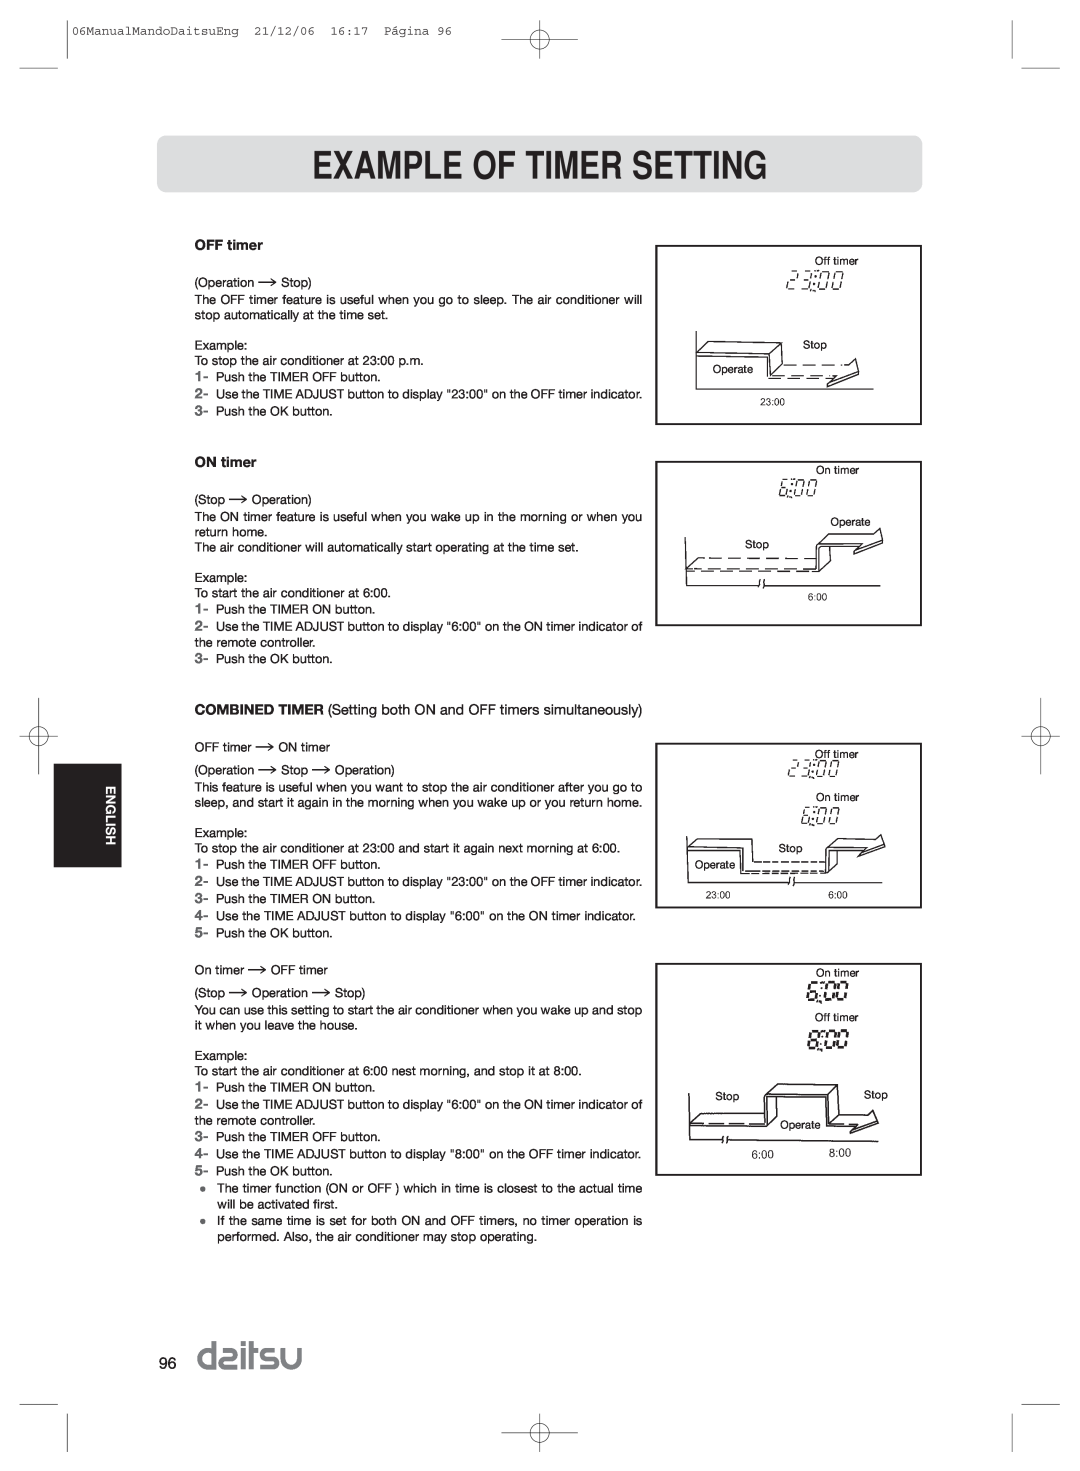 Daitsu ASD 9U2, ASD 129U11 operation manual Example Of Timer Setting, OFF timer, ON timer, English 